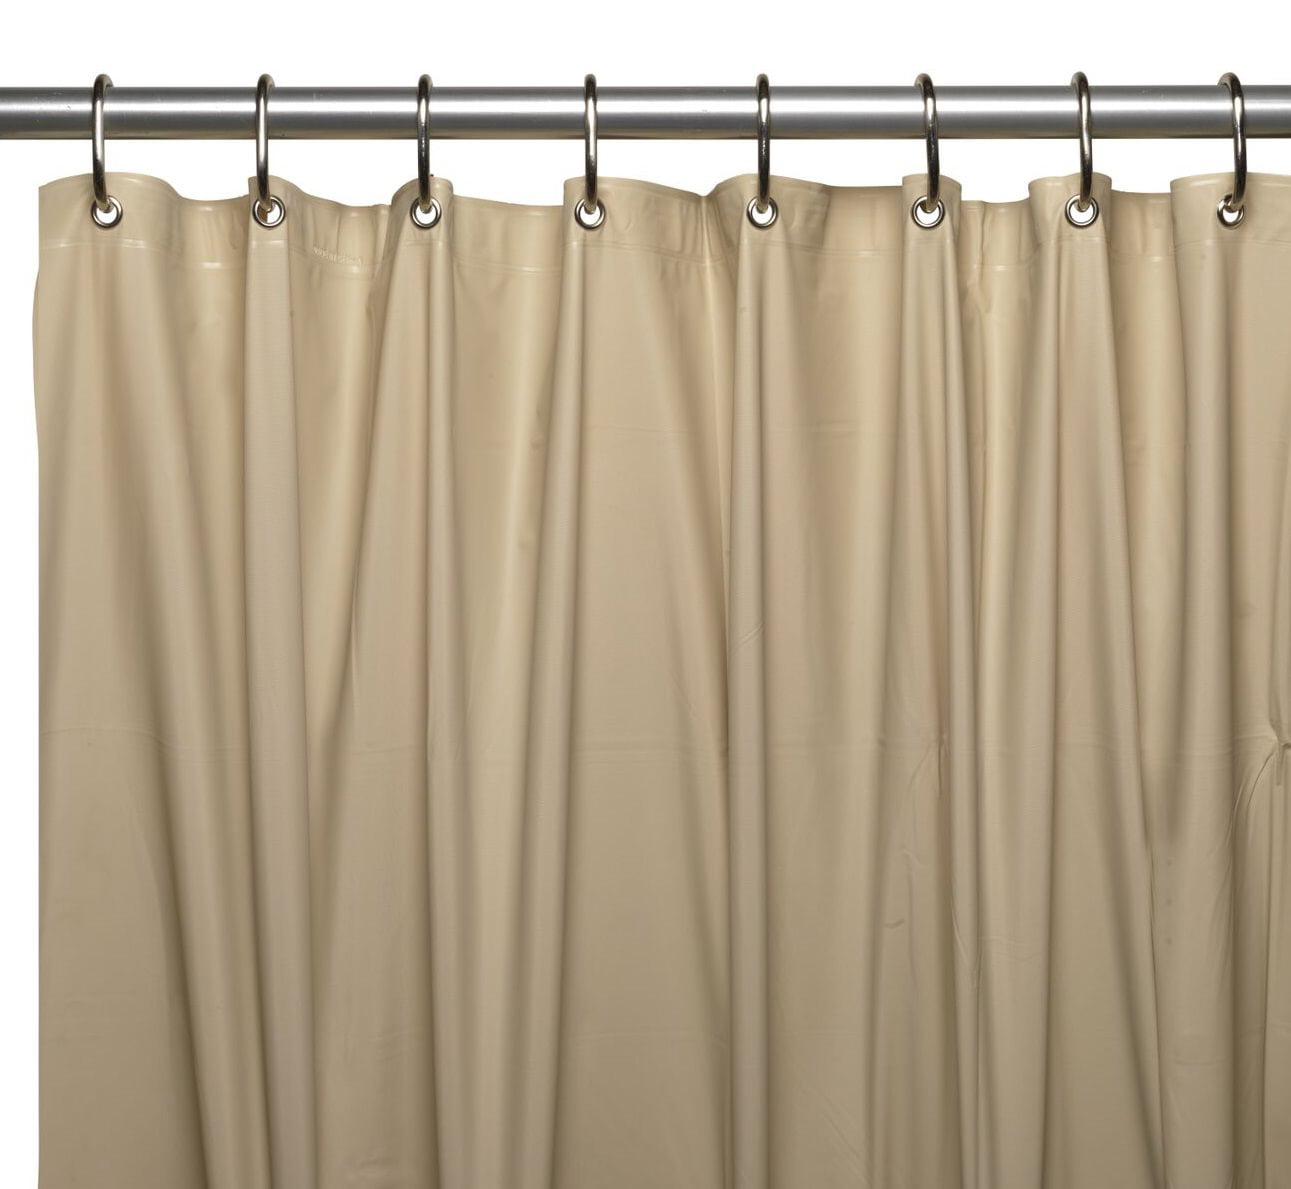 Royal Bath Extra Long 5 Gauge Vinyl Shower Curtain Liner In Linen, Size